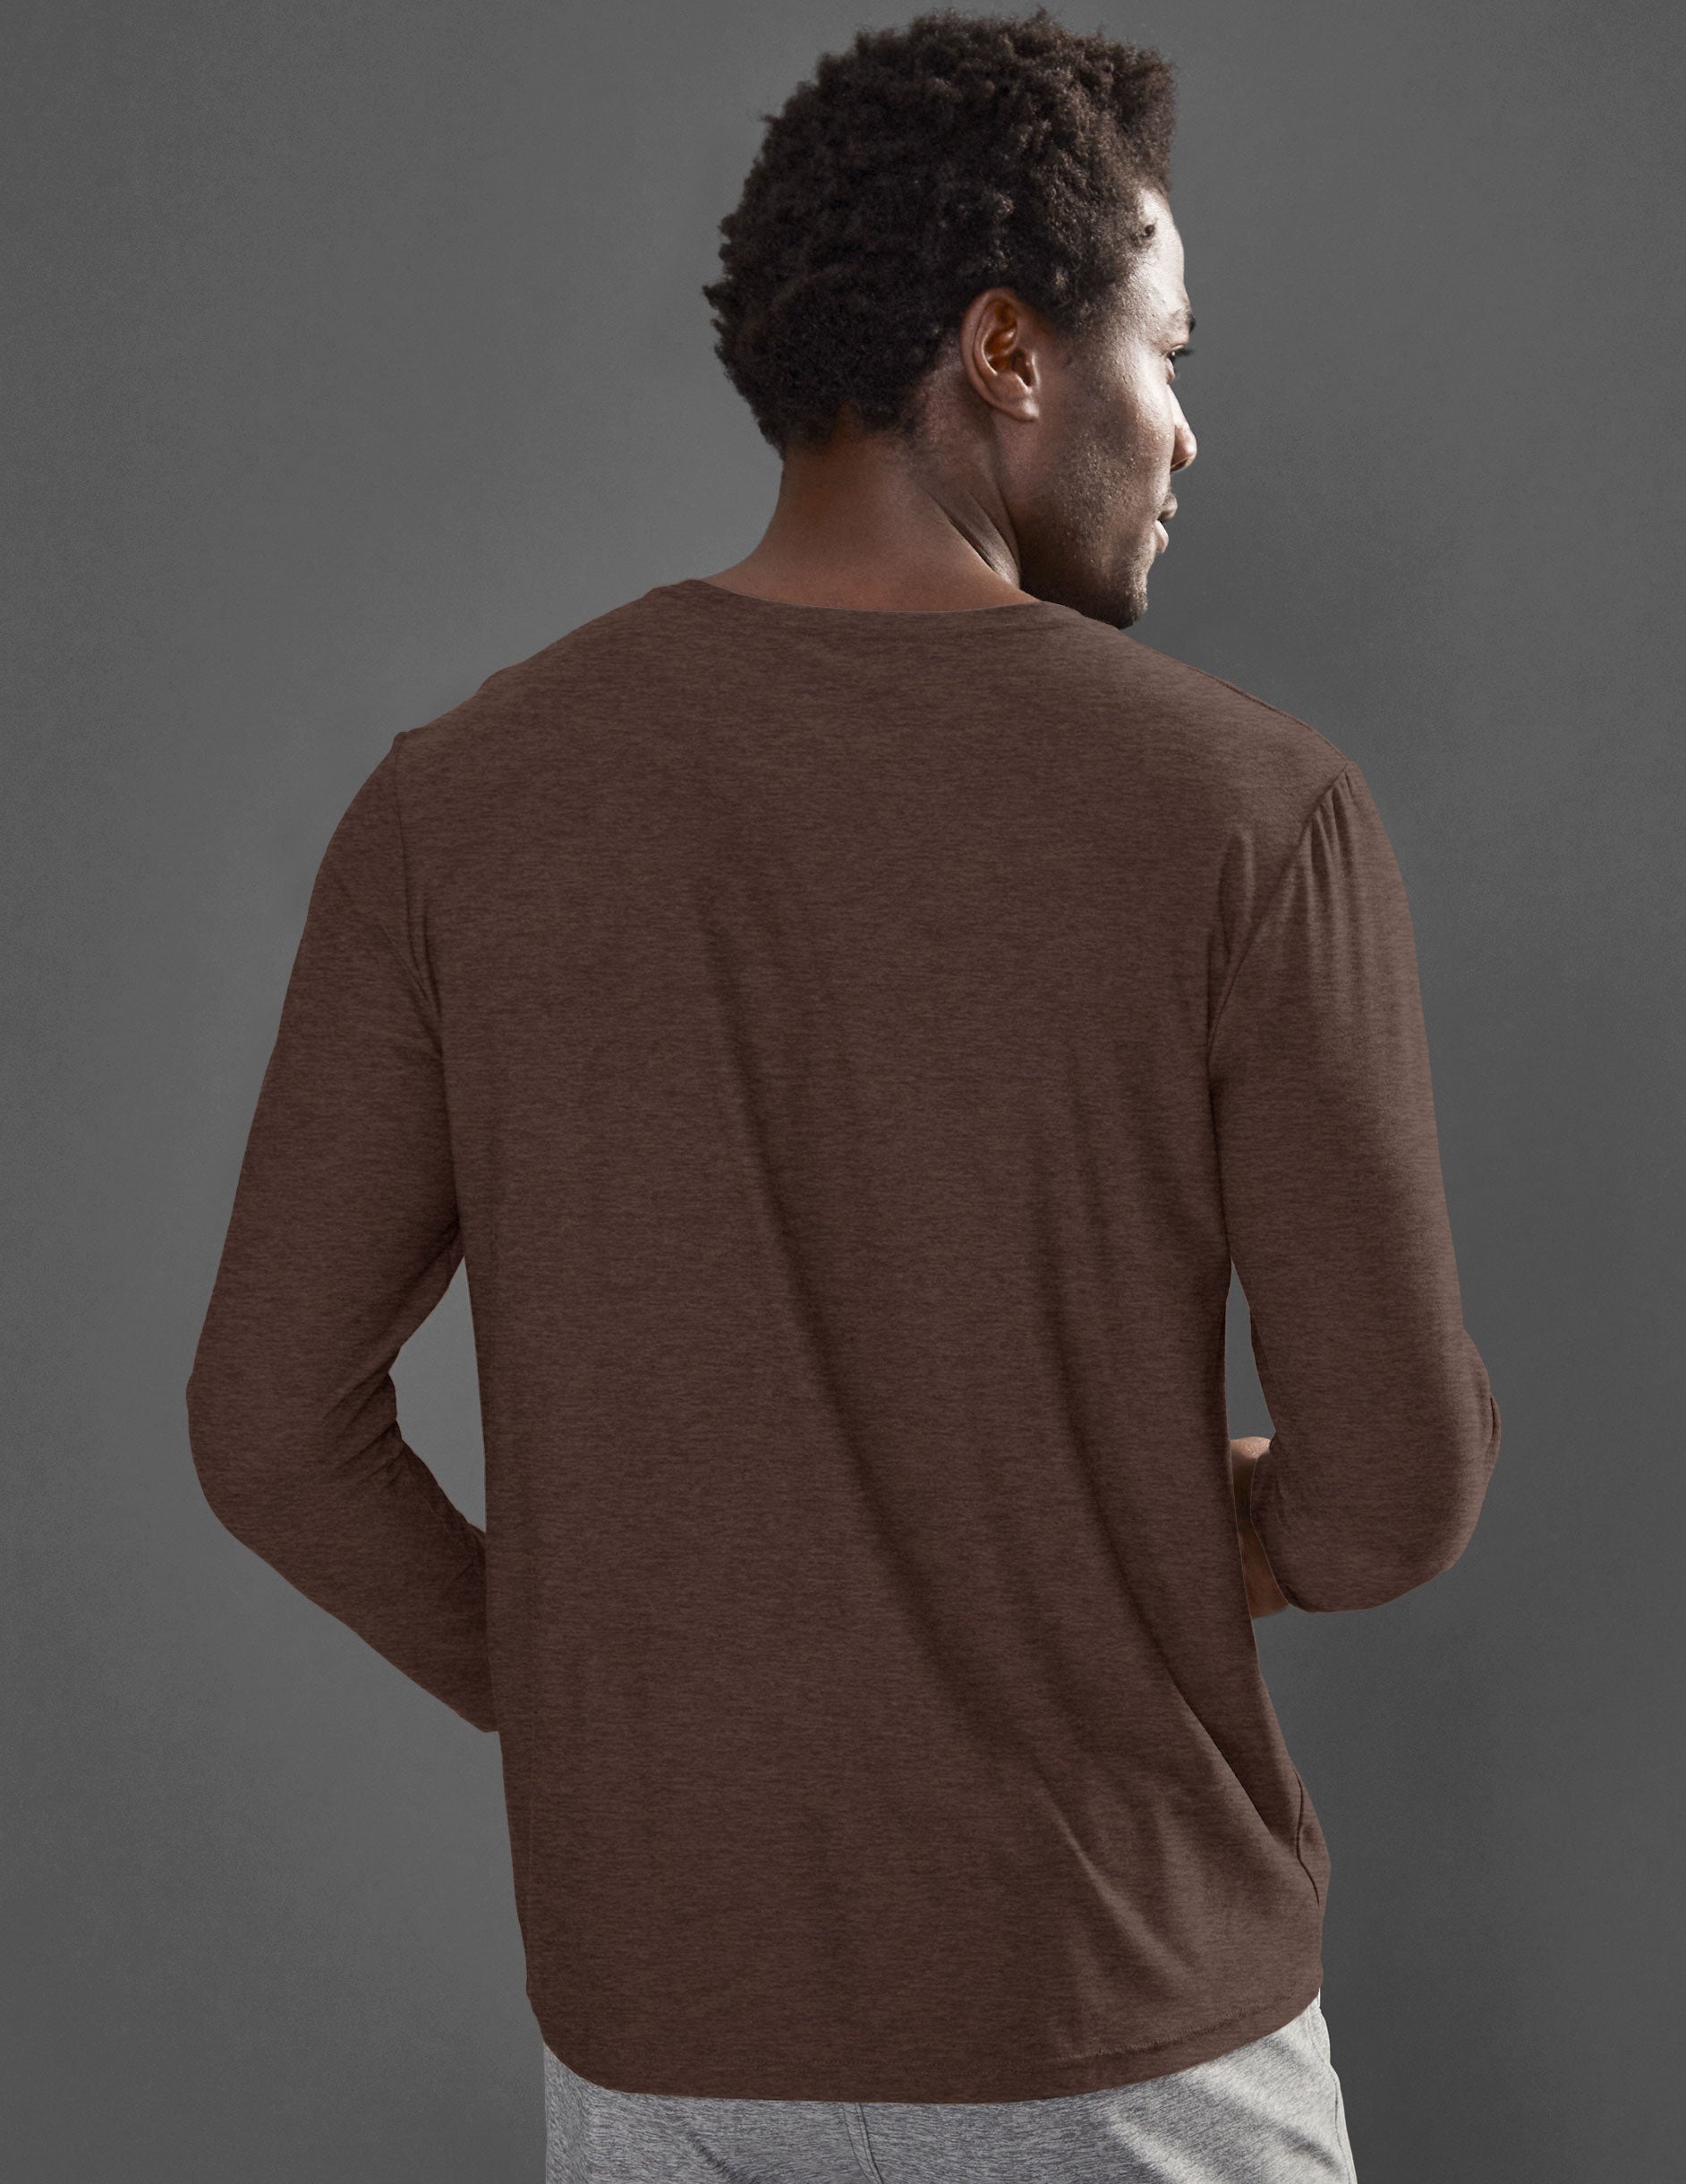 brown men's long sleeve pullover shirt. 